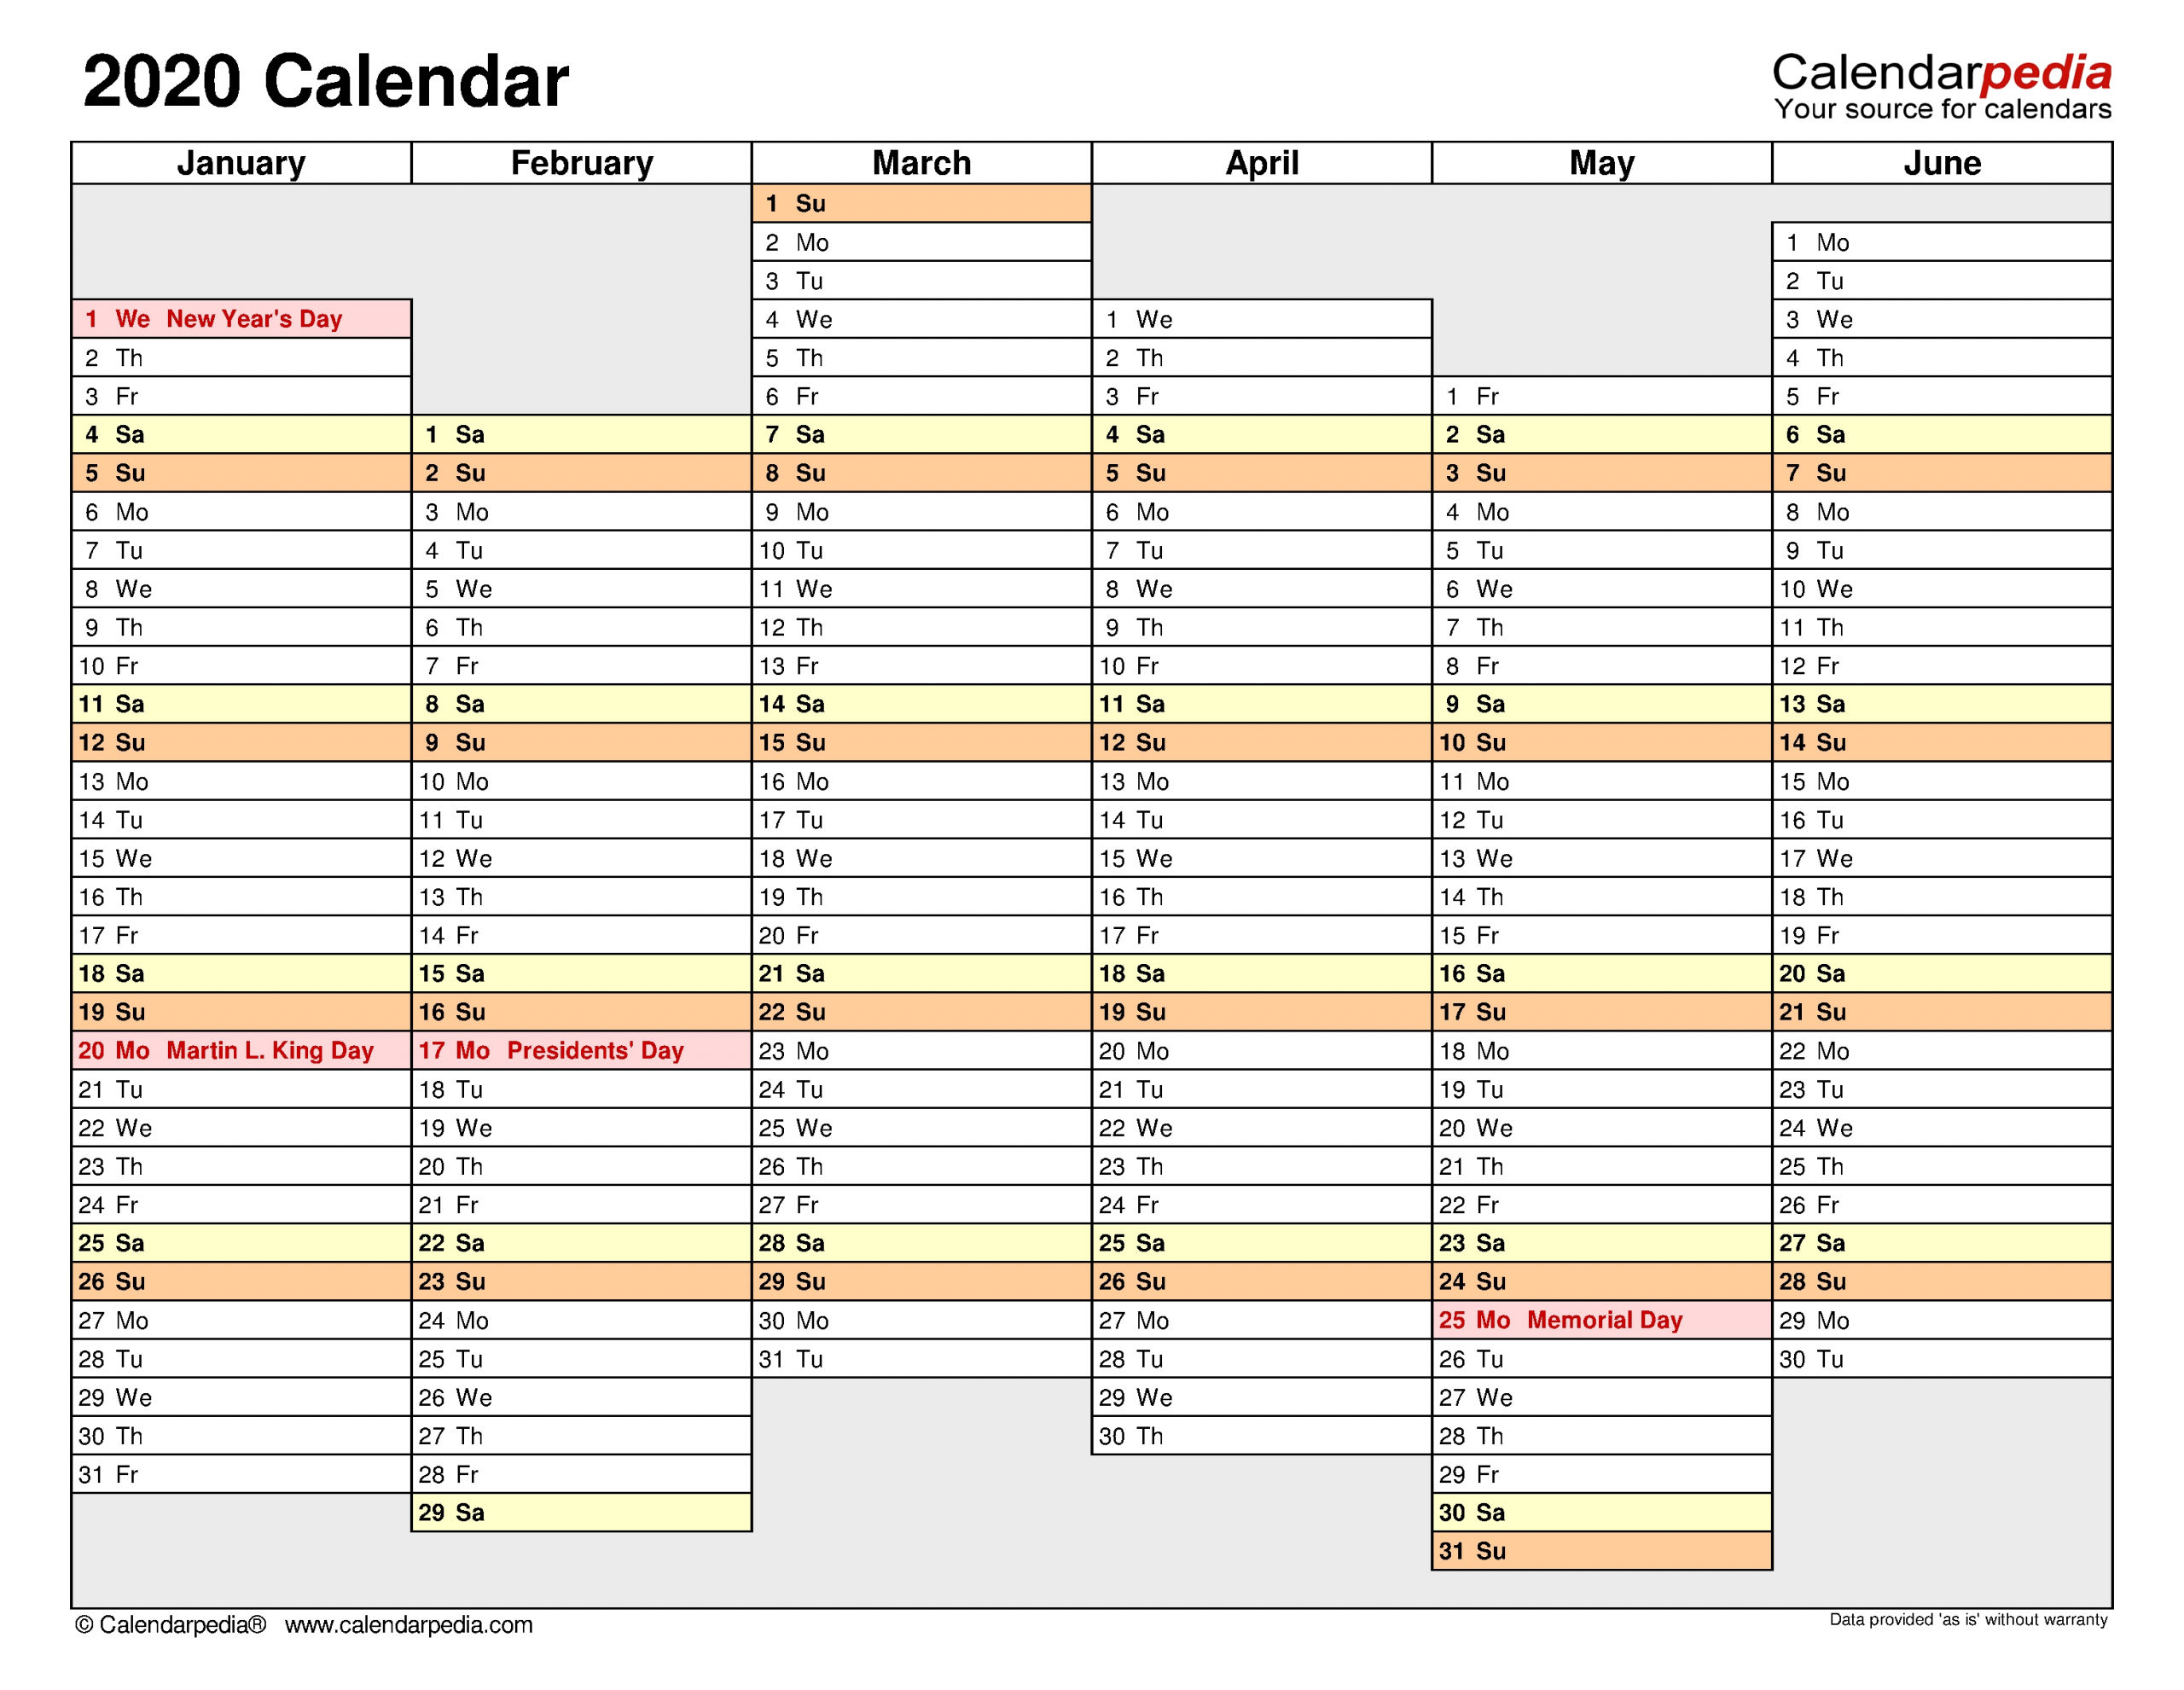 2020 Calendar - Free Printable Word Templates - Calendarpedia regarding Word Church Events Calender For 2020